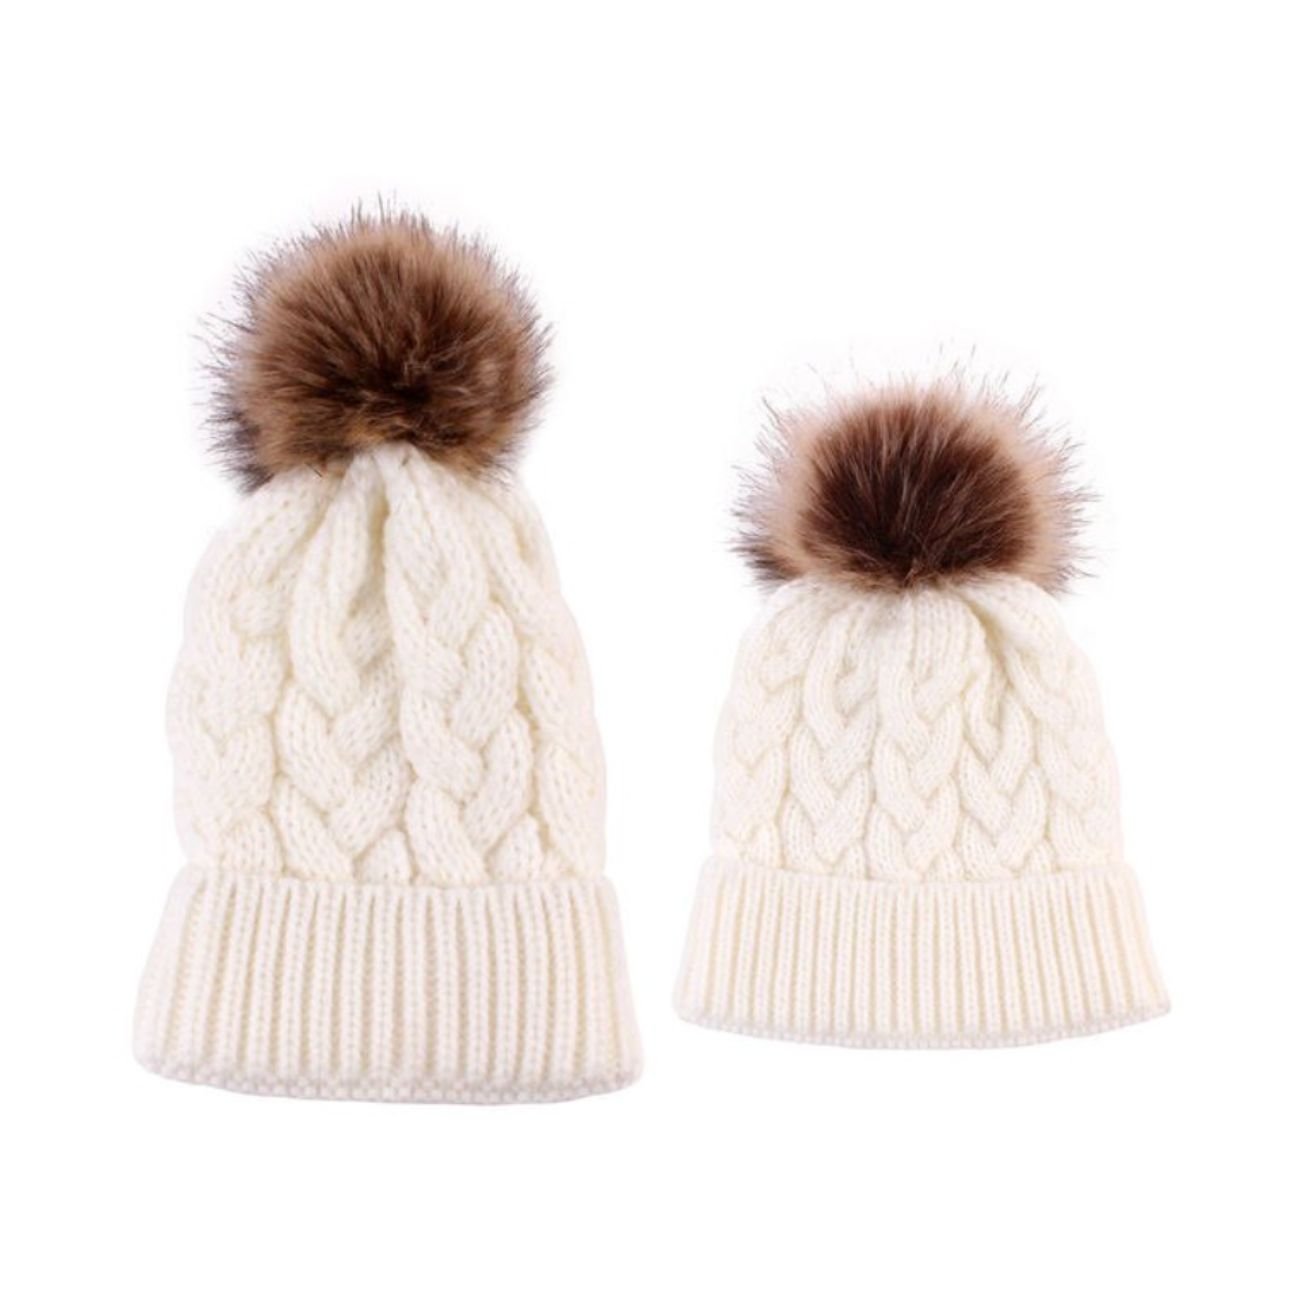 Matching Mummy and Baby Winter Hats - White